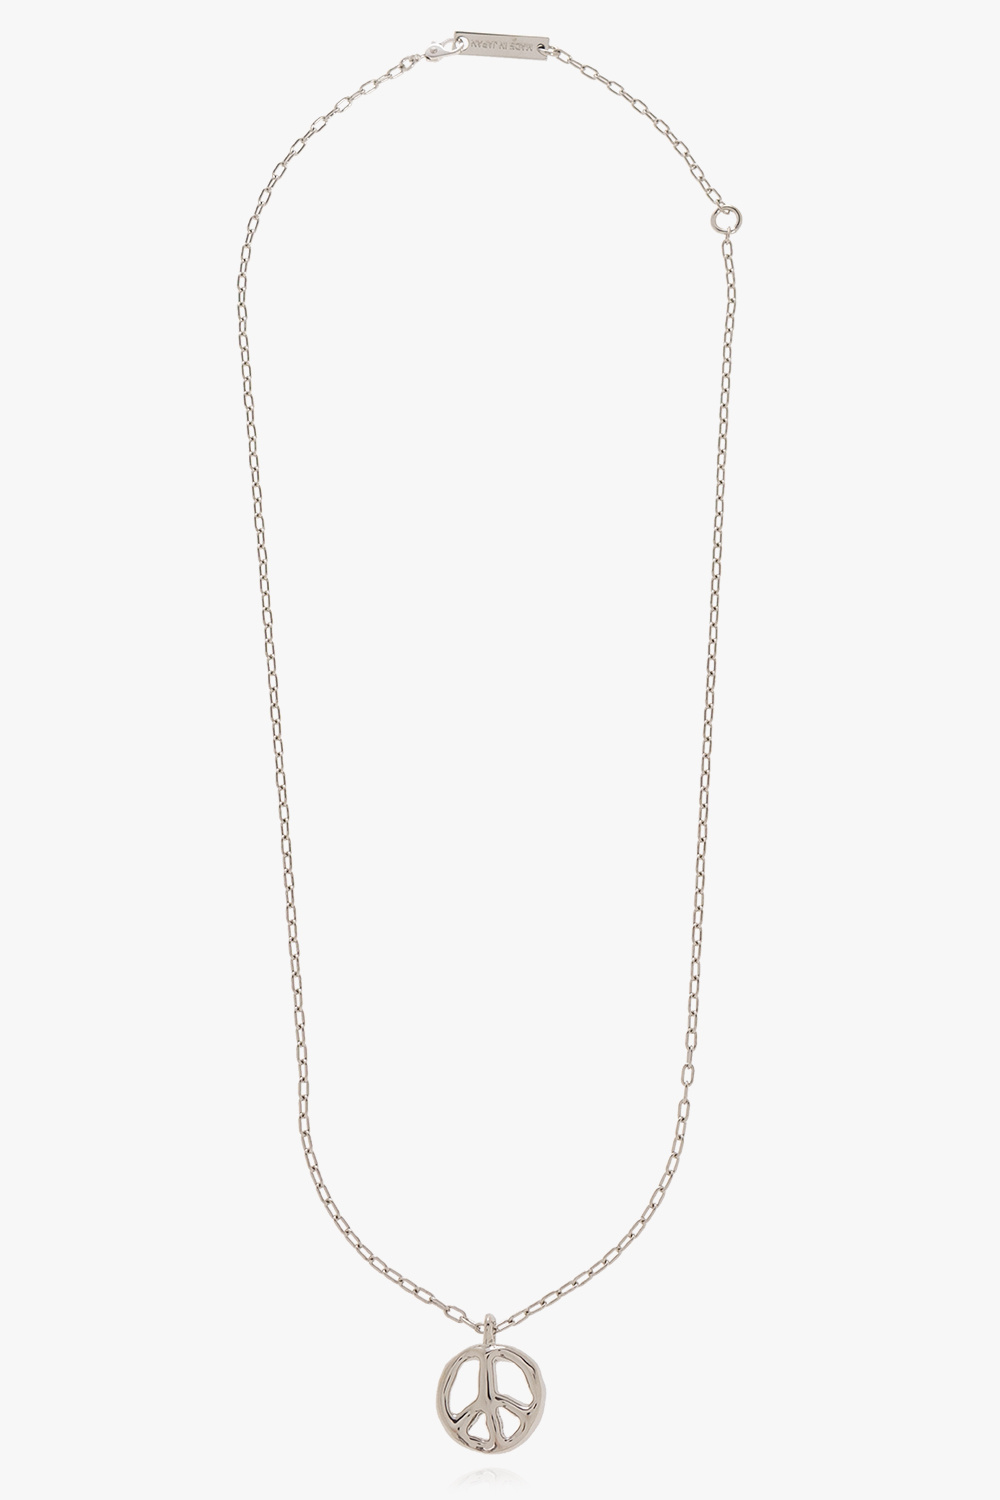 Ambush Brass necklace with pendant